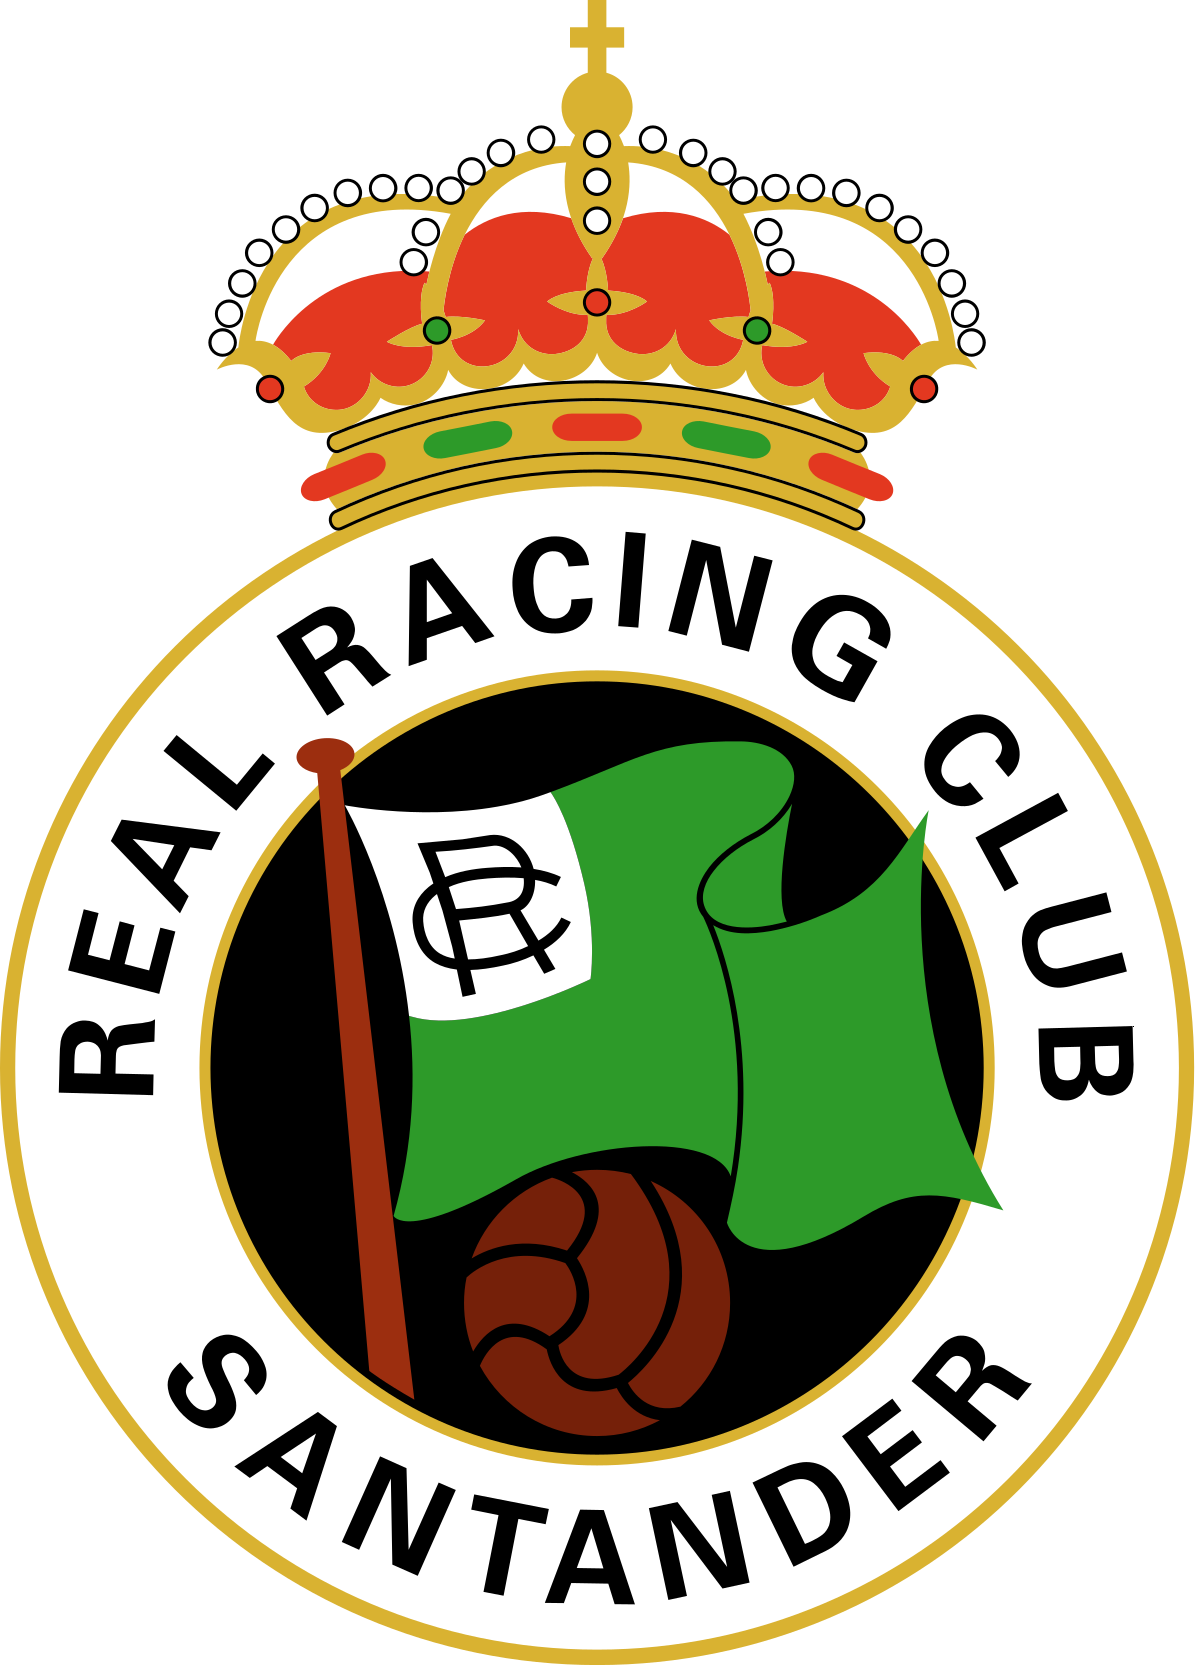 Racing de Santander - Wikipedia